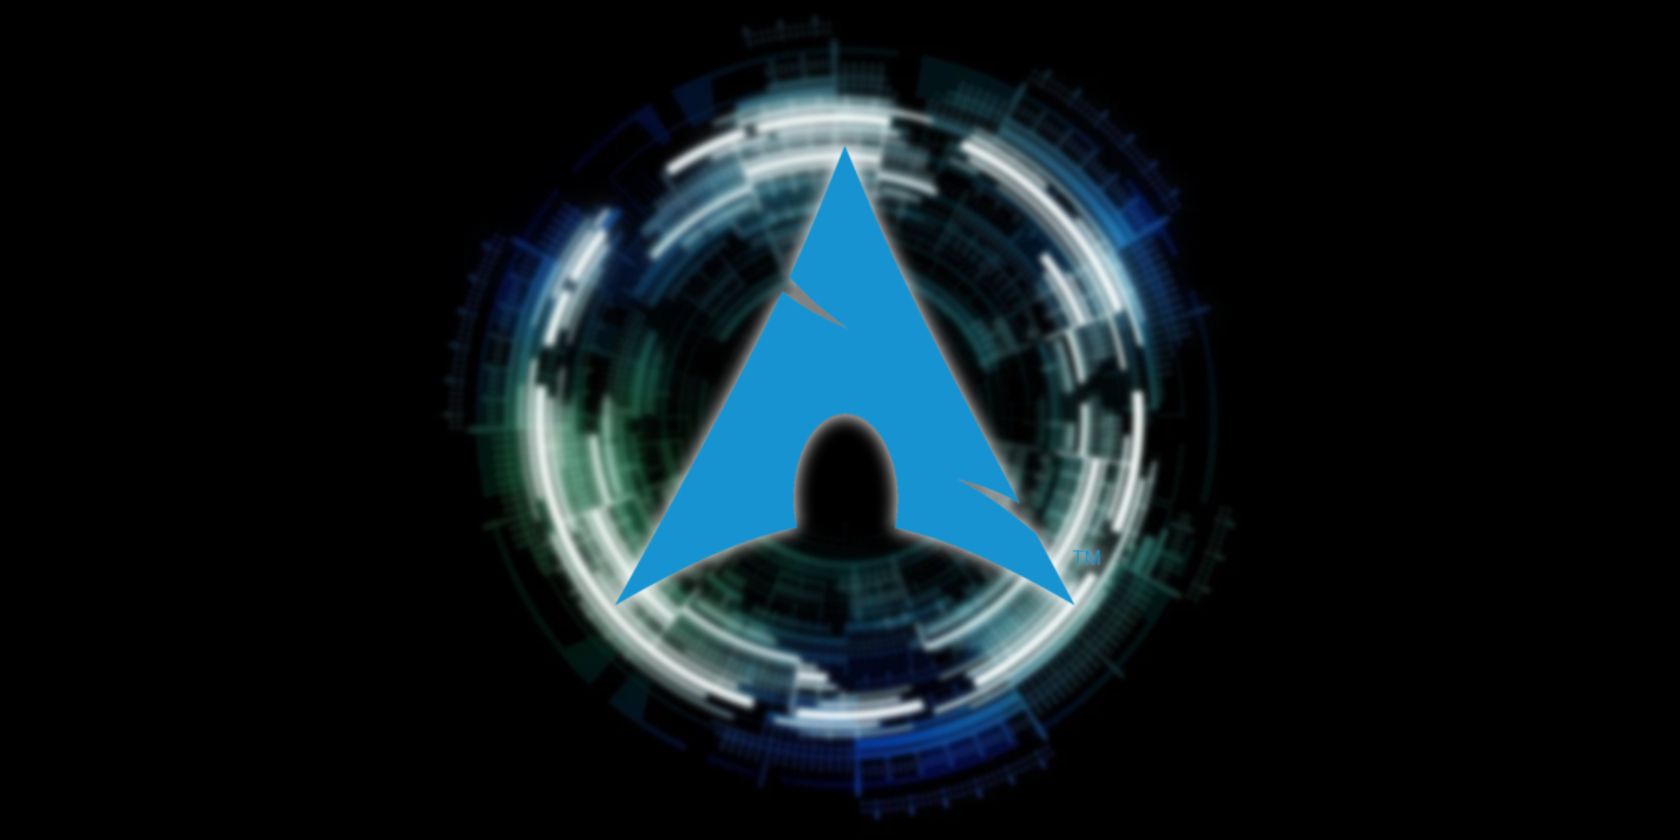 arch linux logo on a dark background